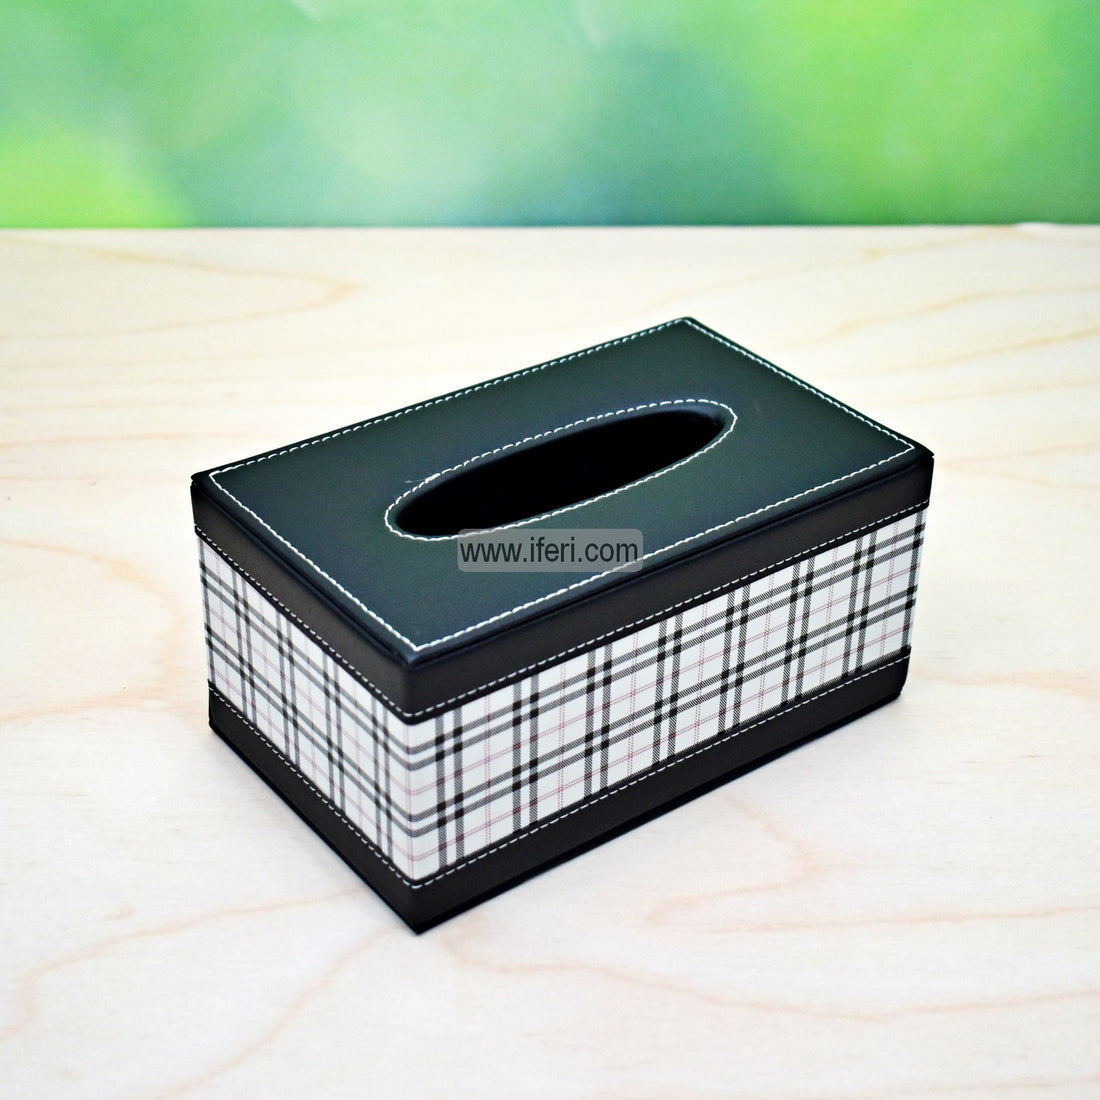 Buy Decorative Tissue Box through online from iferi.com